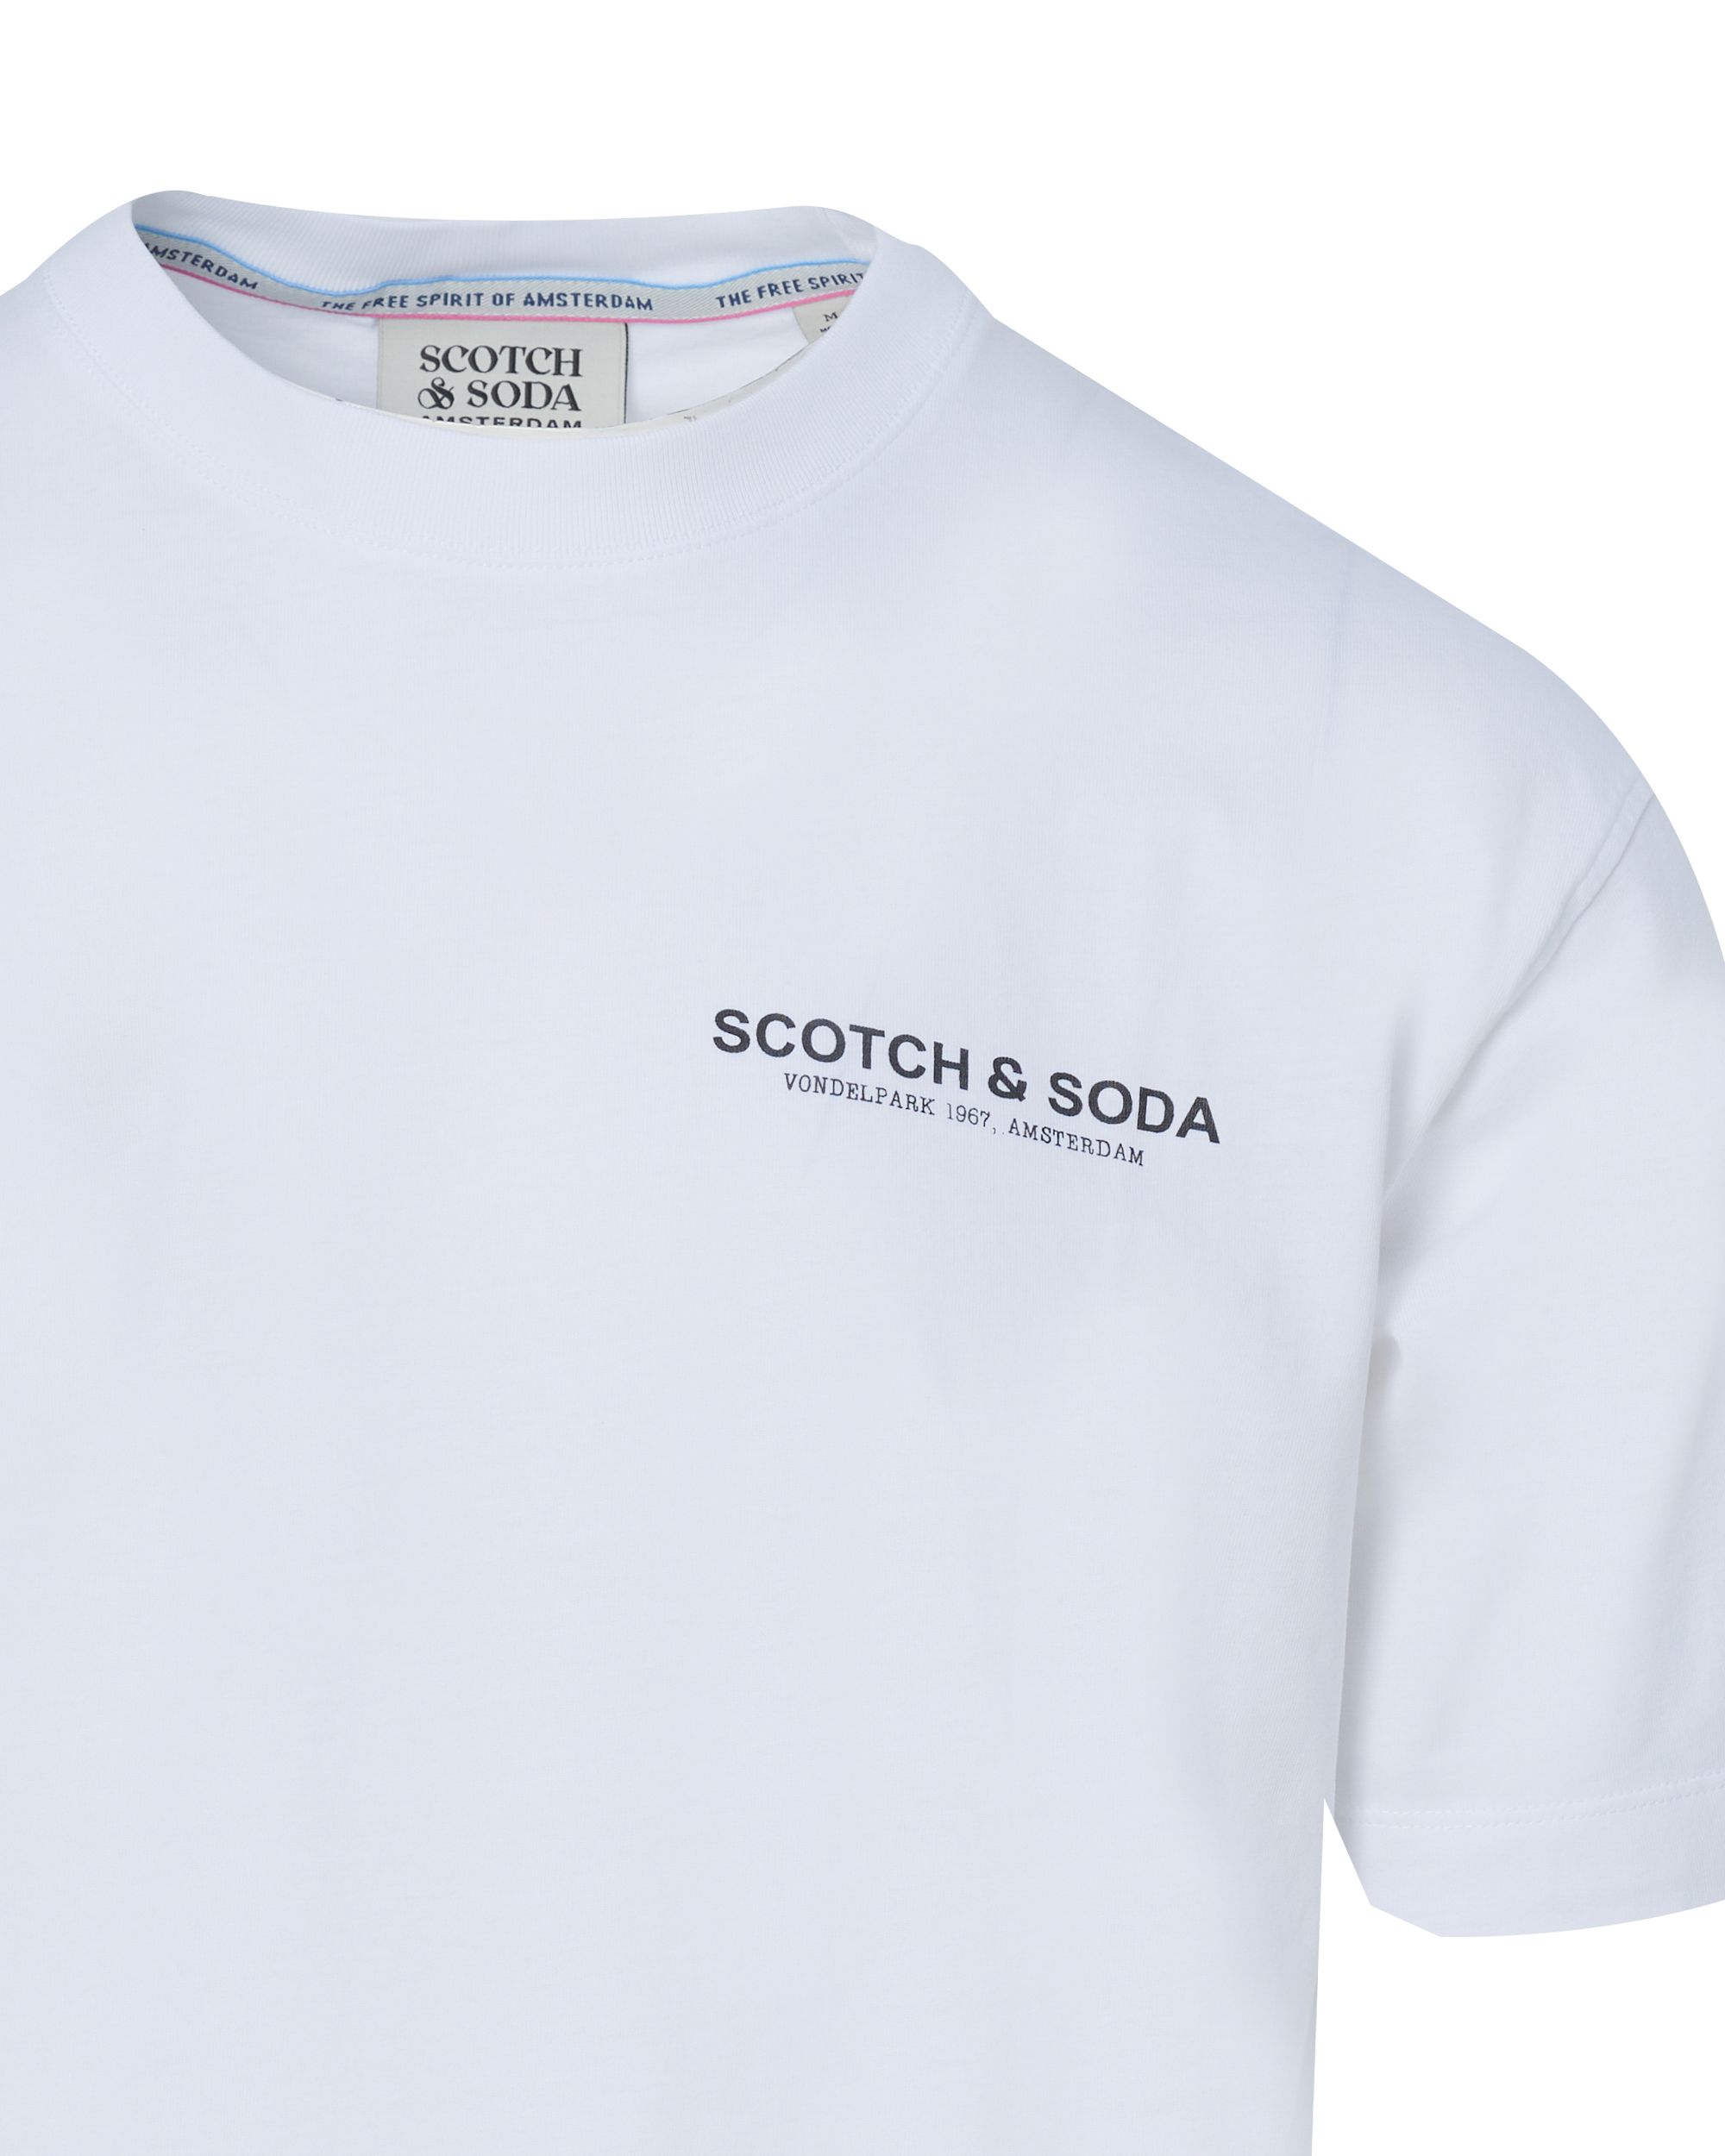 Kan worden berekend wildernis Rechtdoor Scotch & Soda T-shirt KM | Shop nu - Only for Men